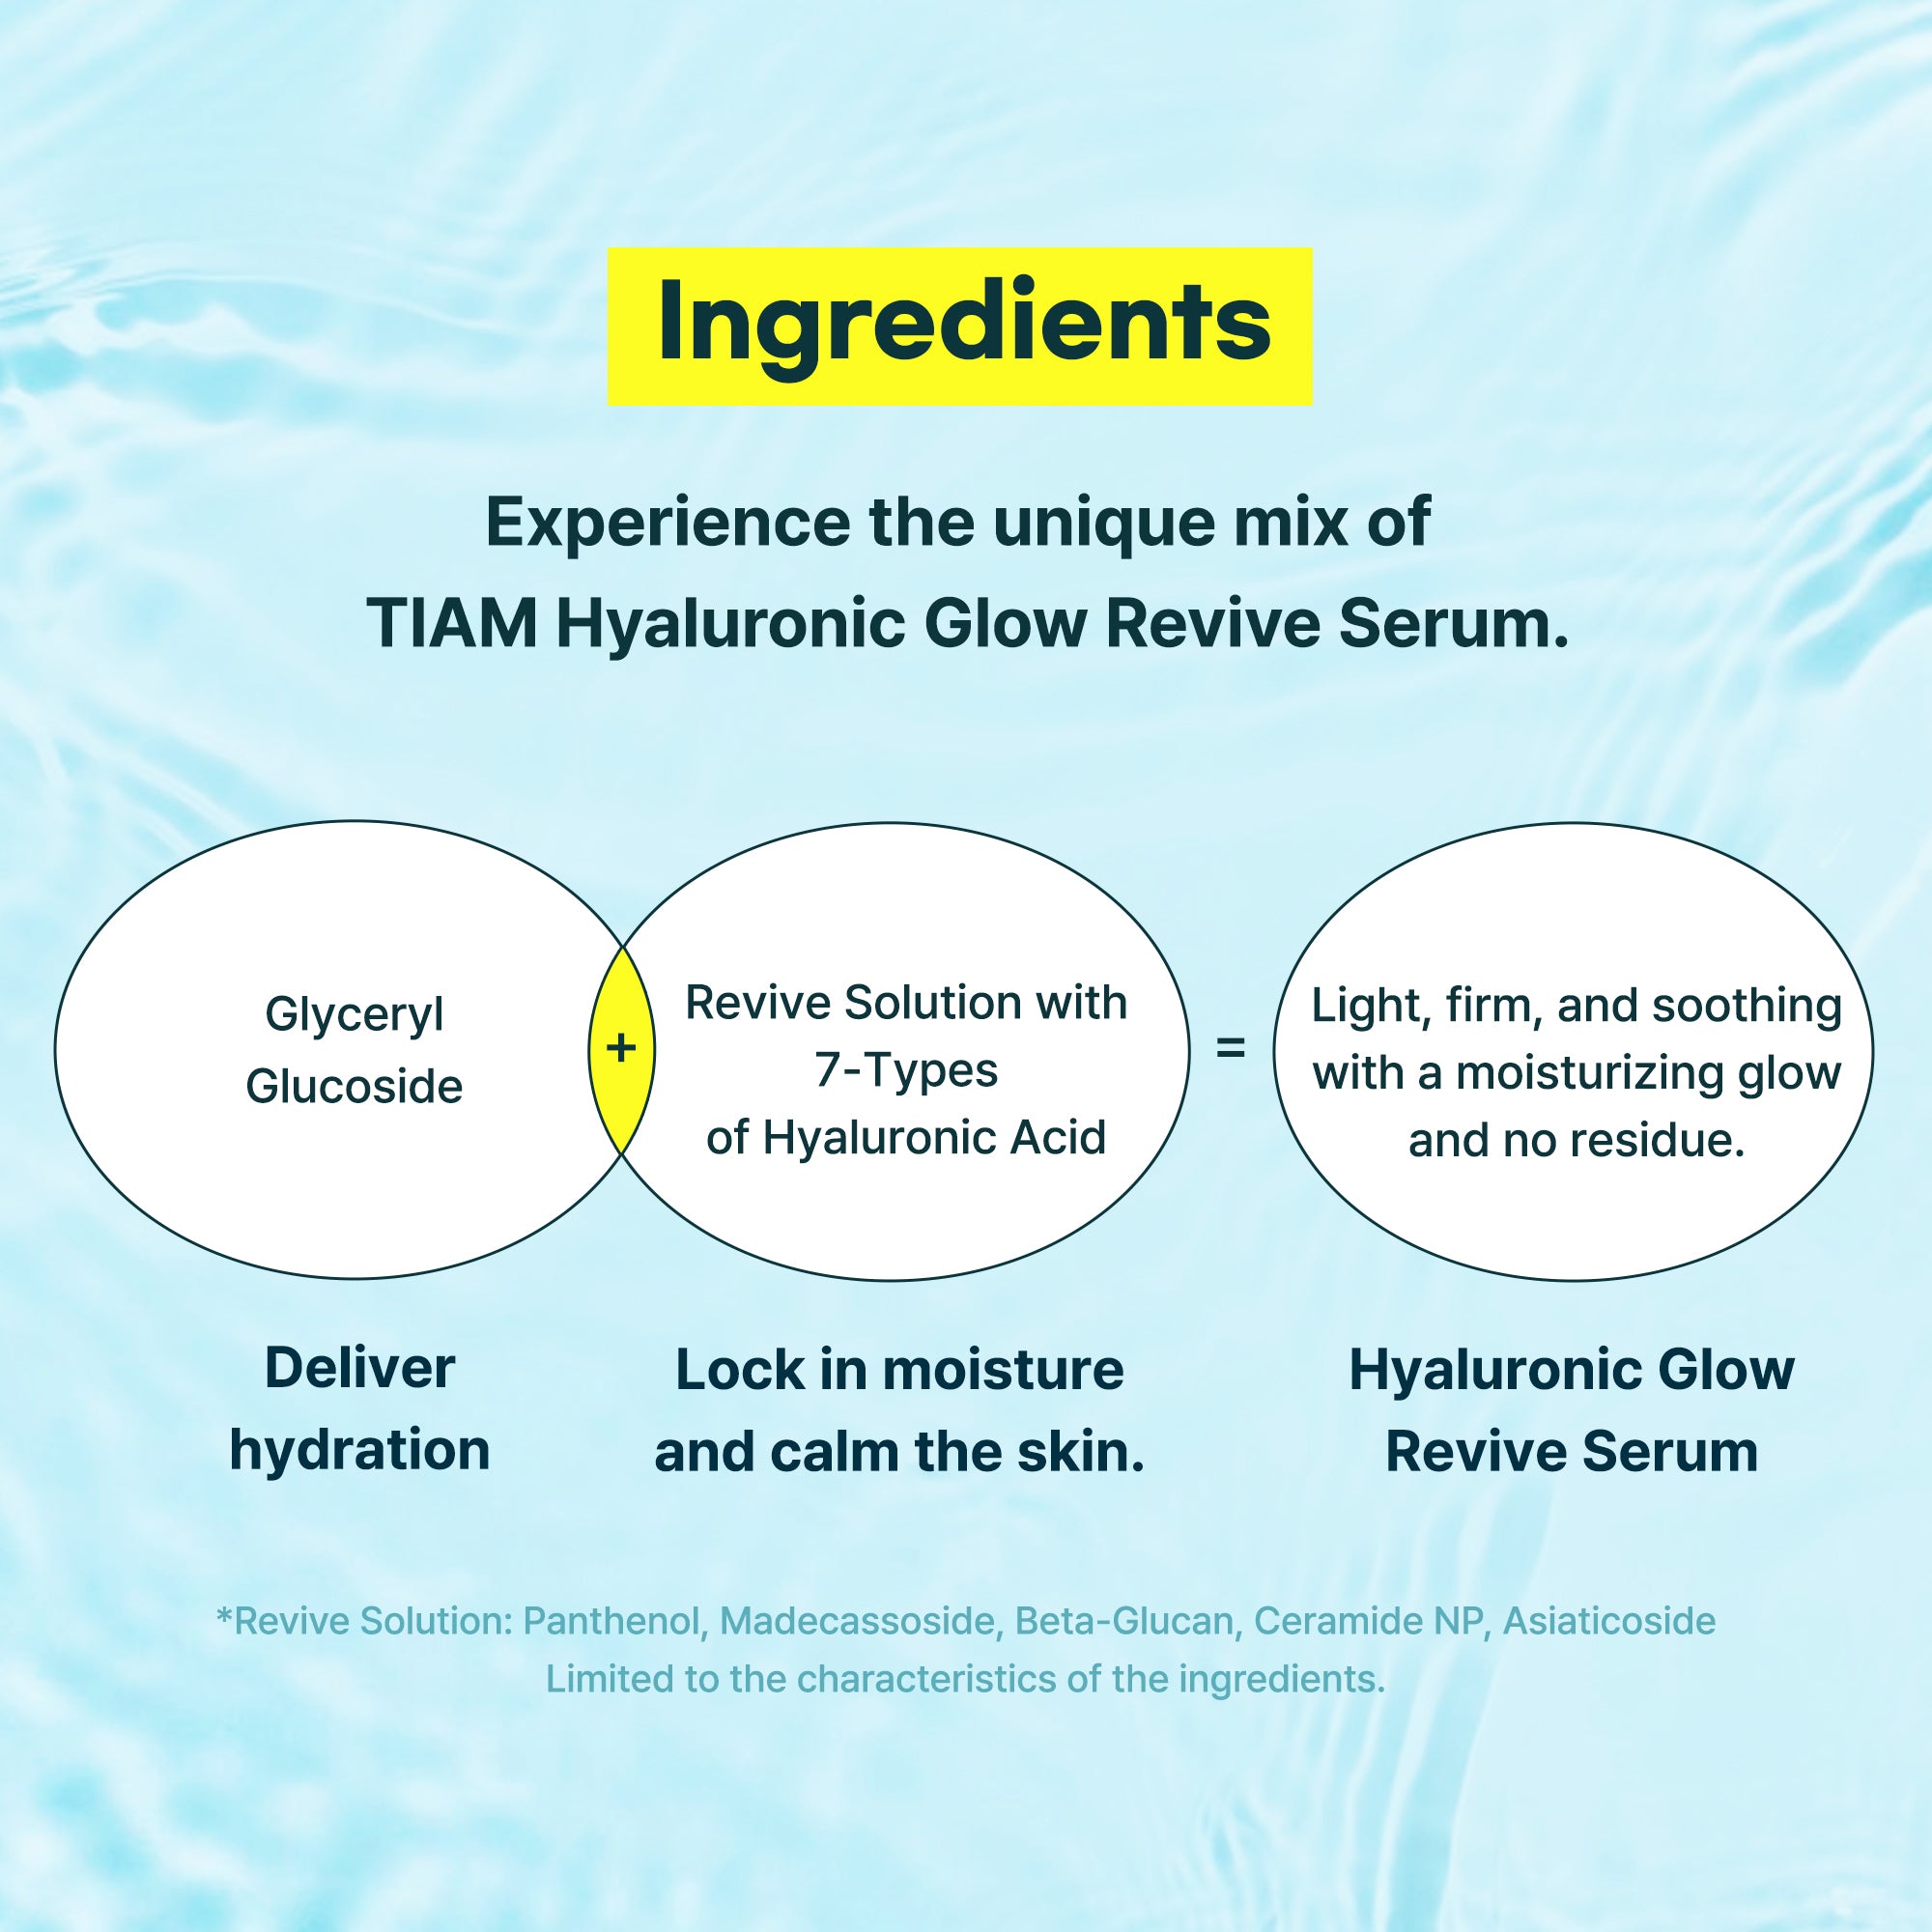 Hyaluronic Glow Revive Serum